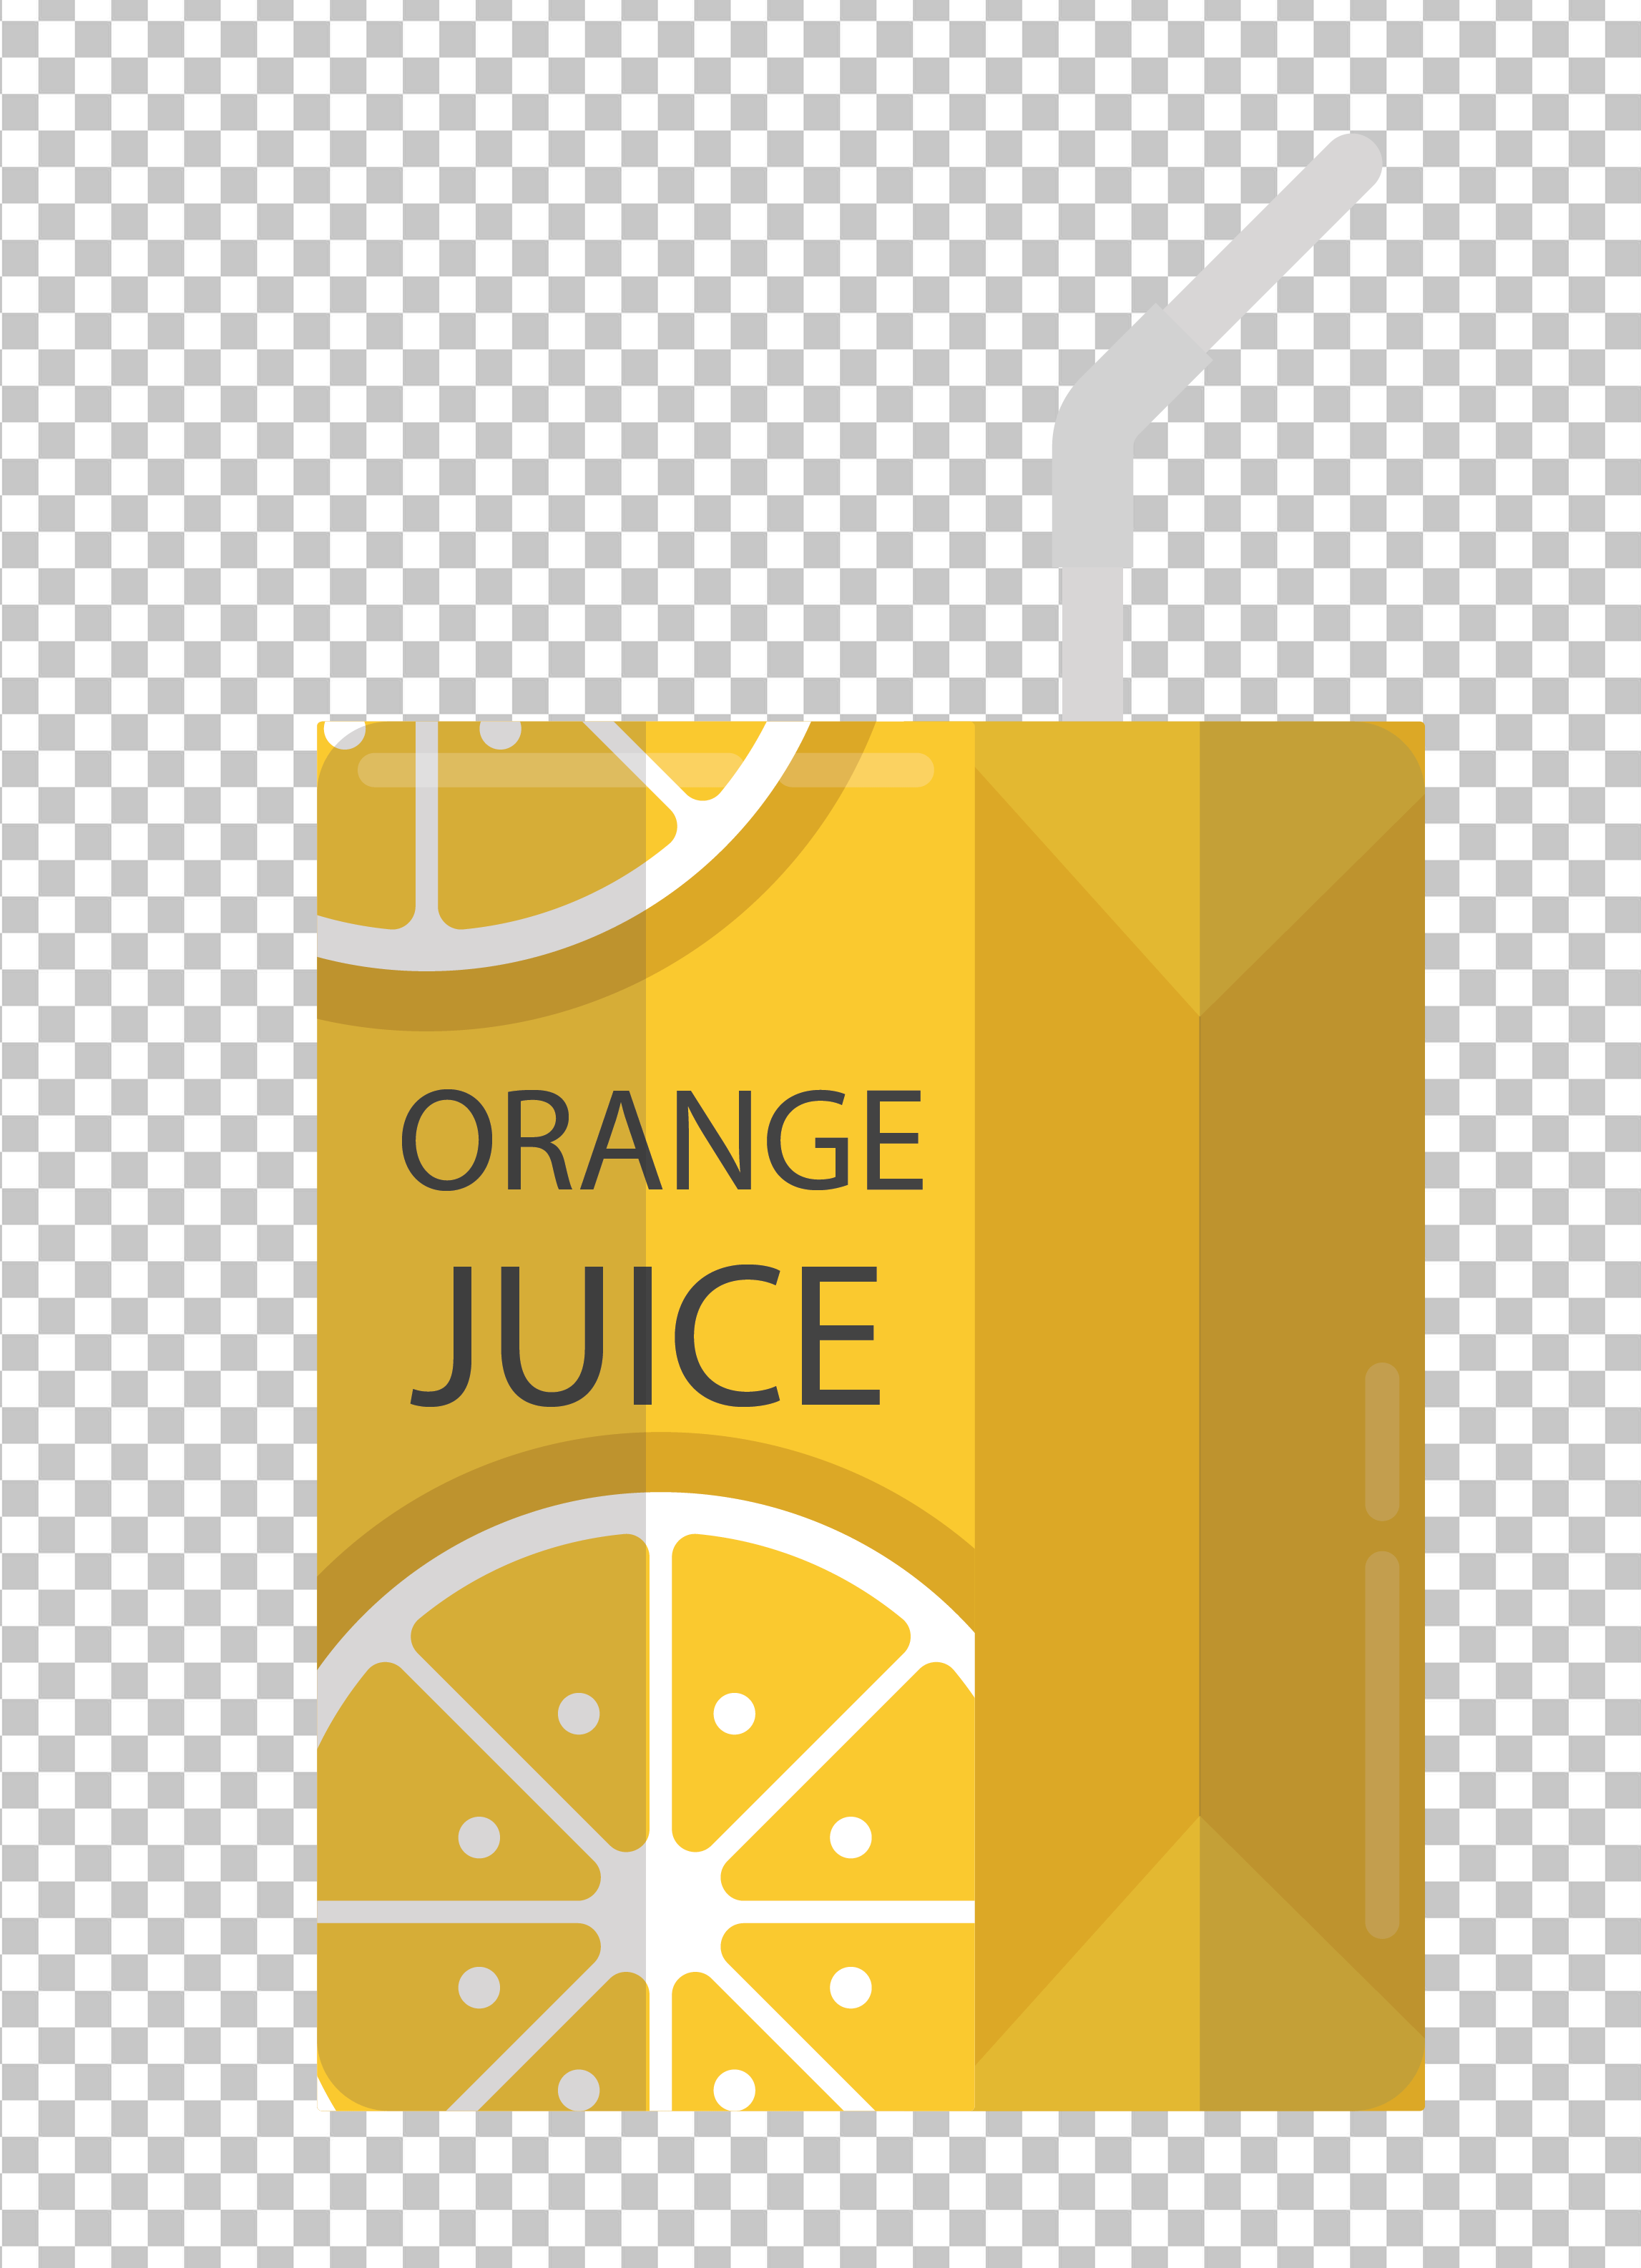 Orange Juice with Straw PNG Image.